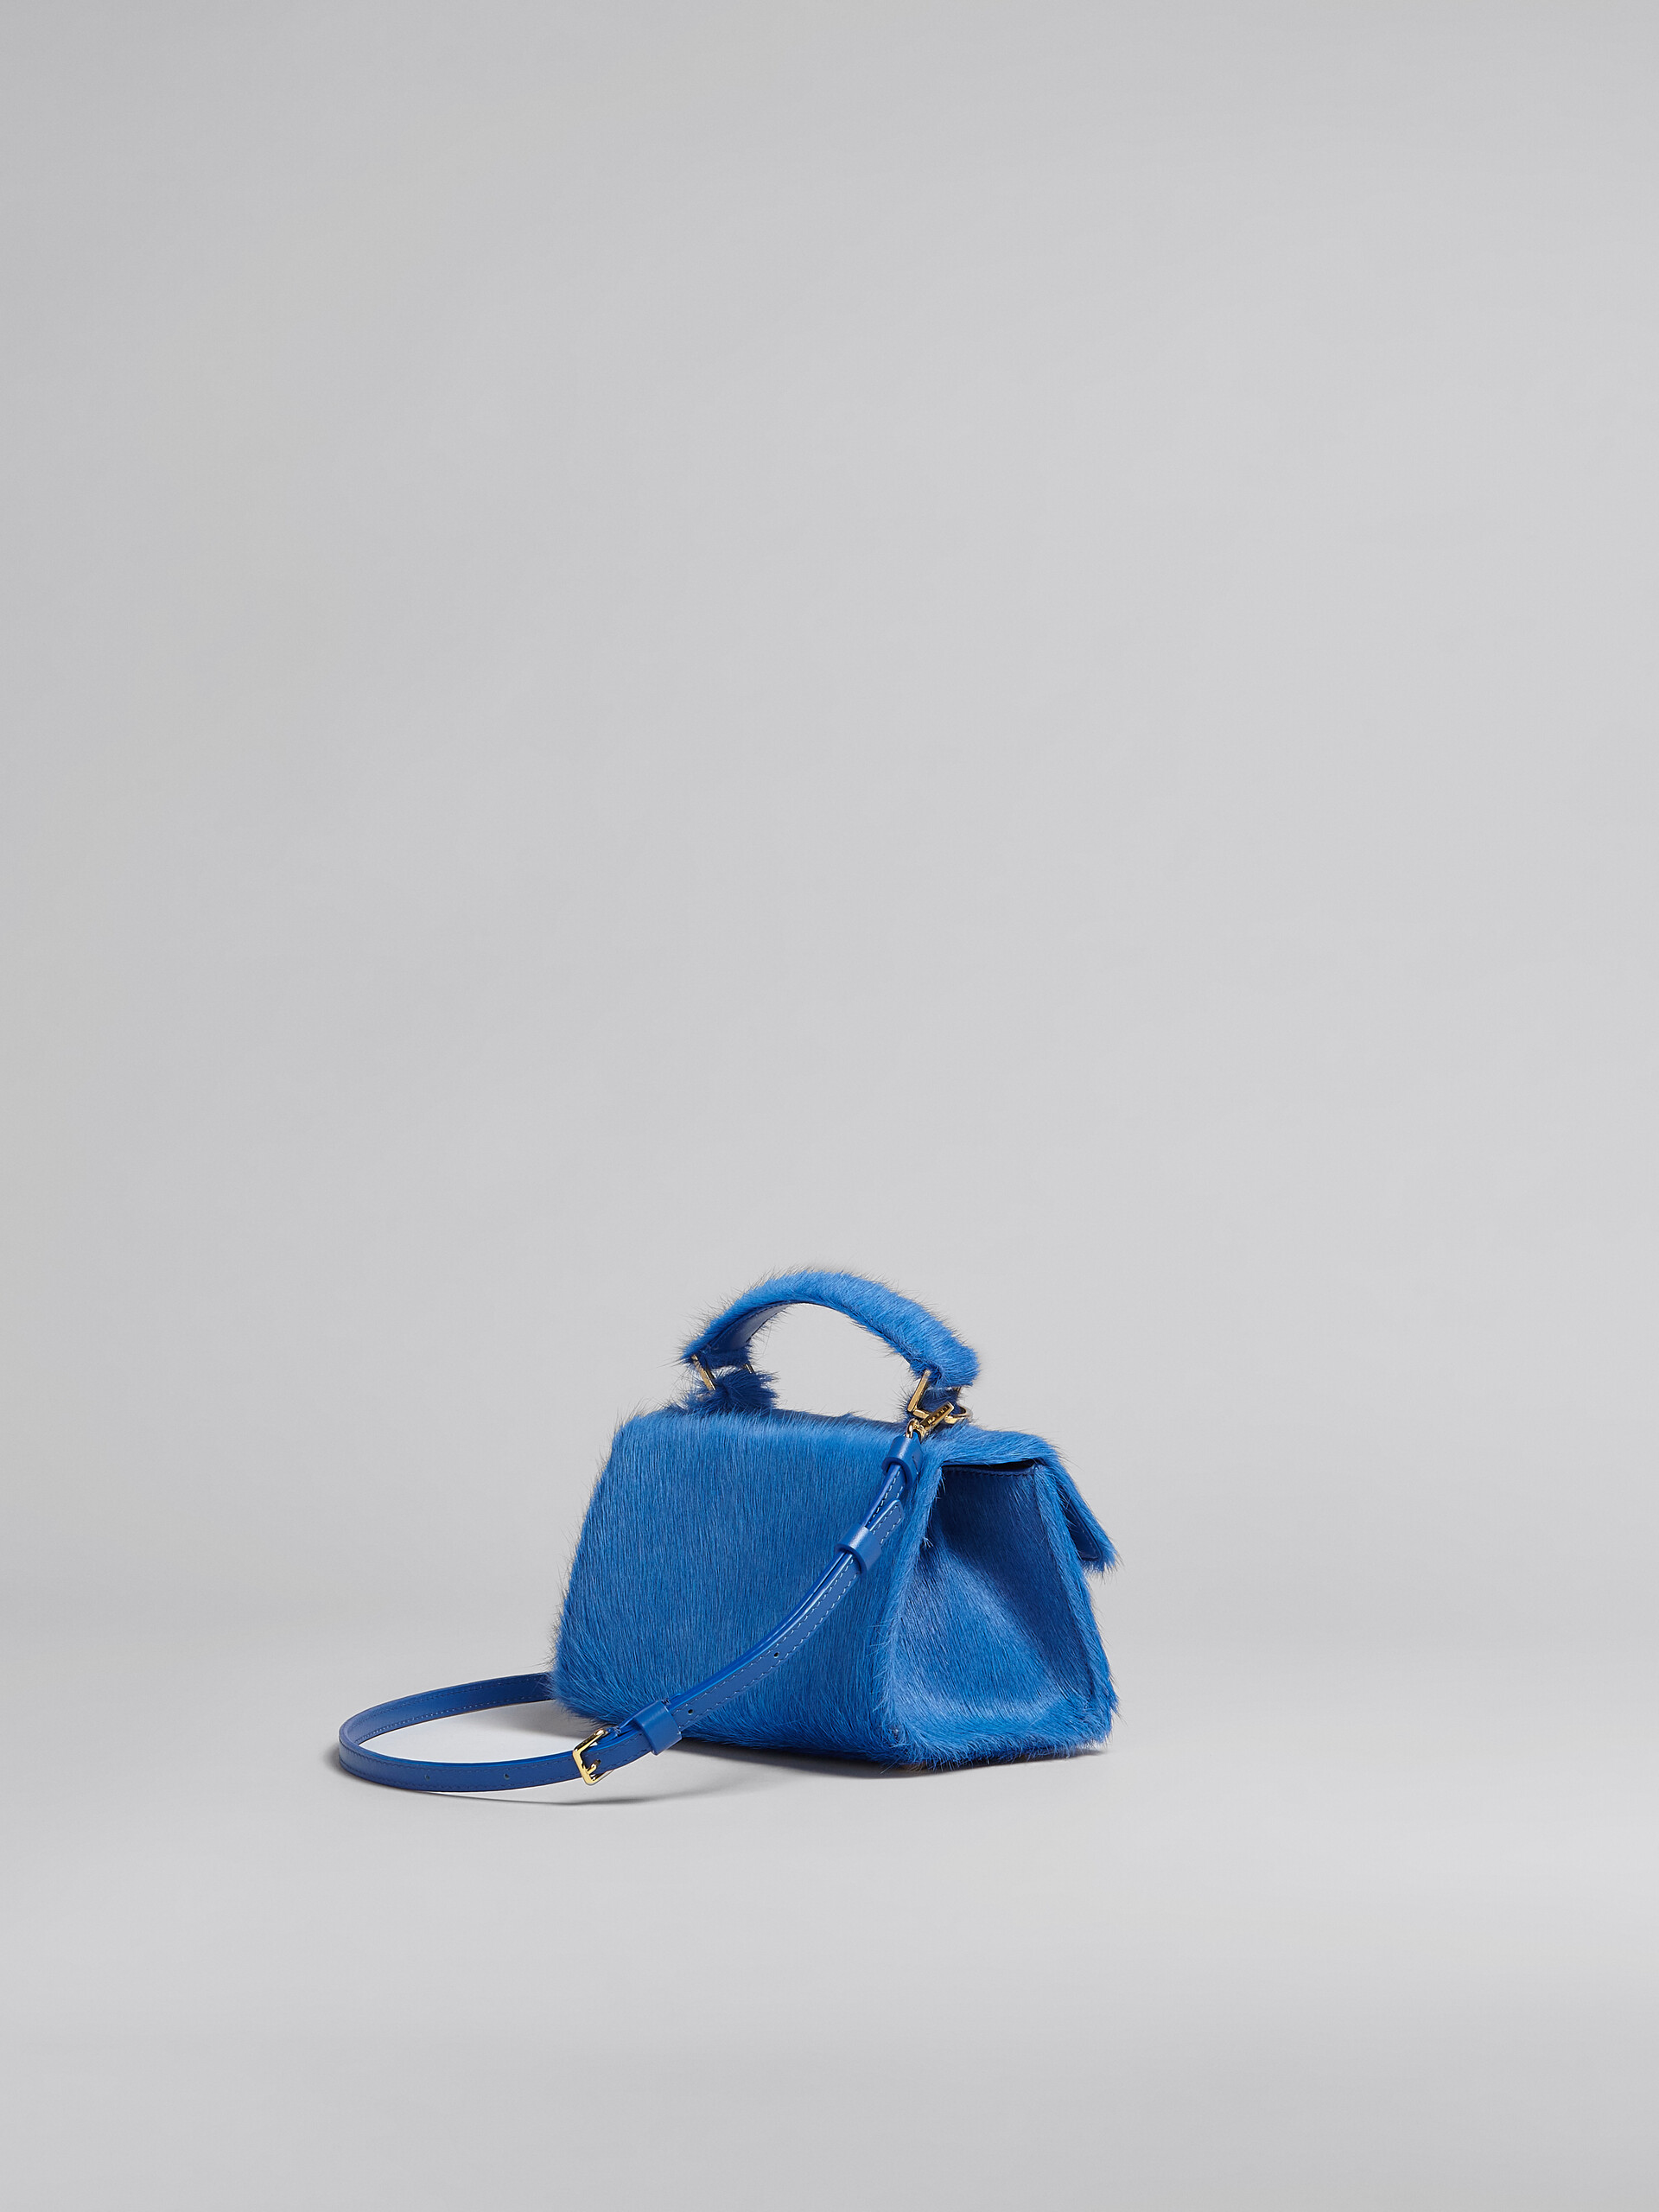 Relativity Mini Bag in blue long hair calfskin - Handbag - Image 3